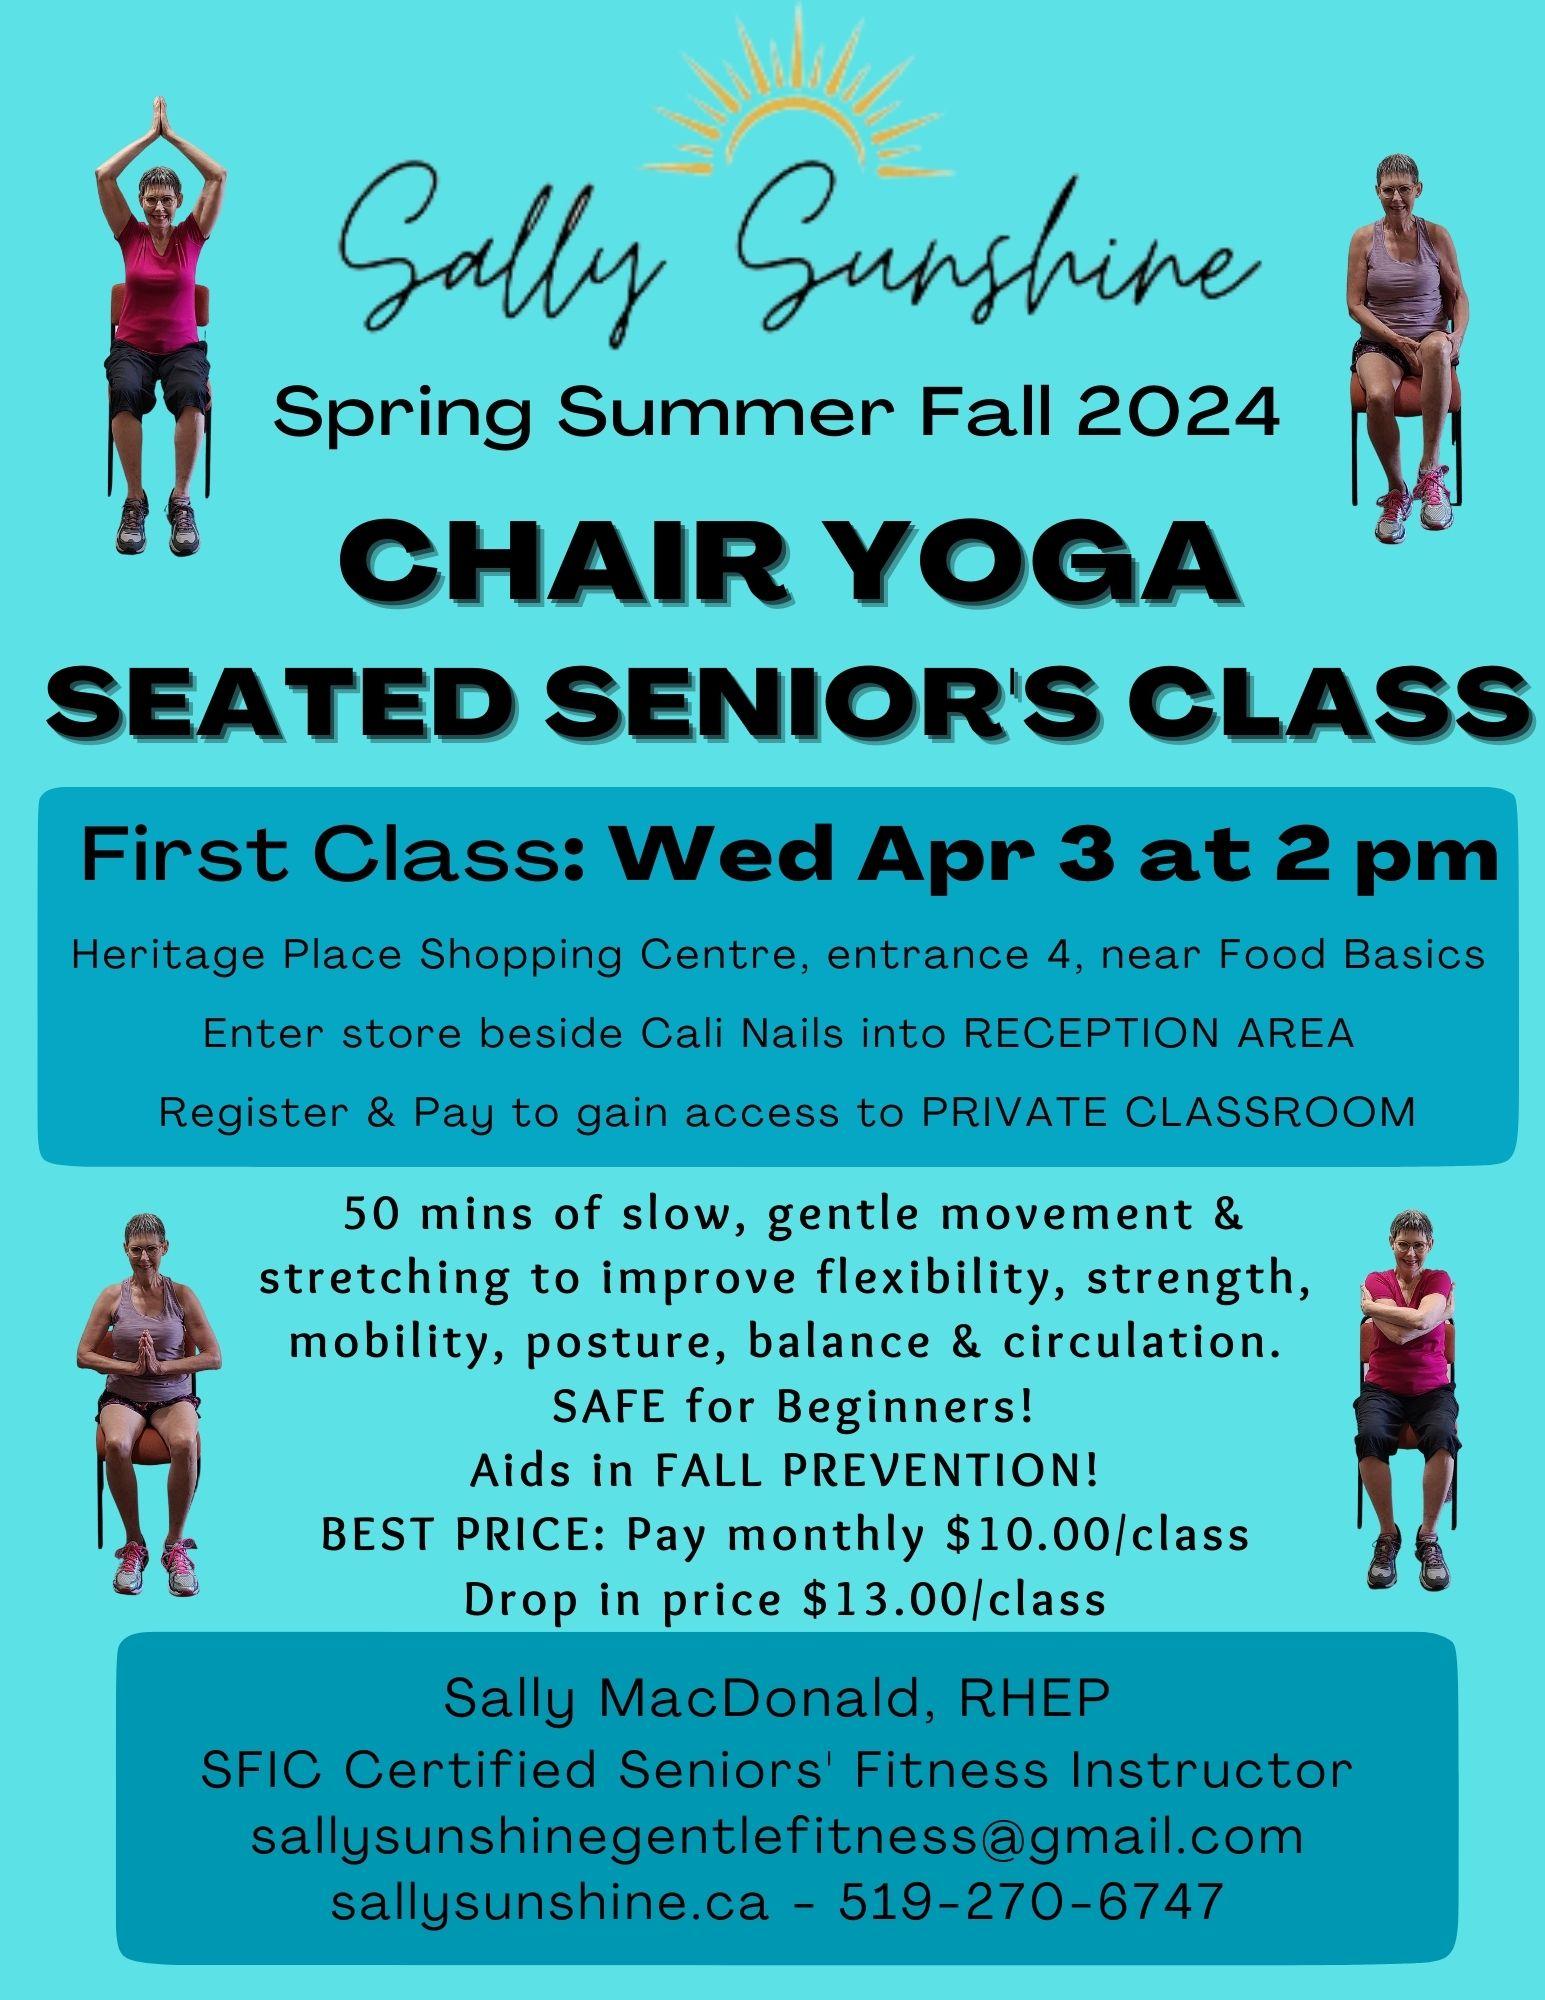 SPAR's chair aerobics classes for senior citizens to continue